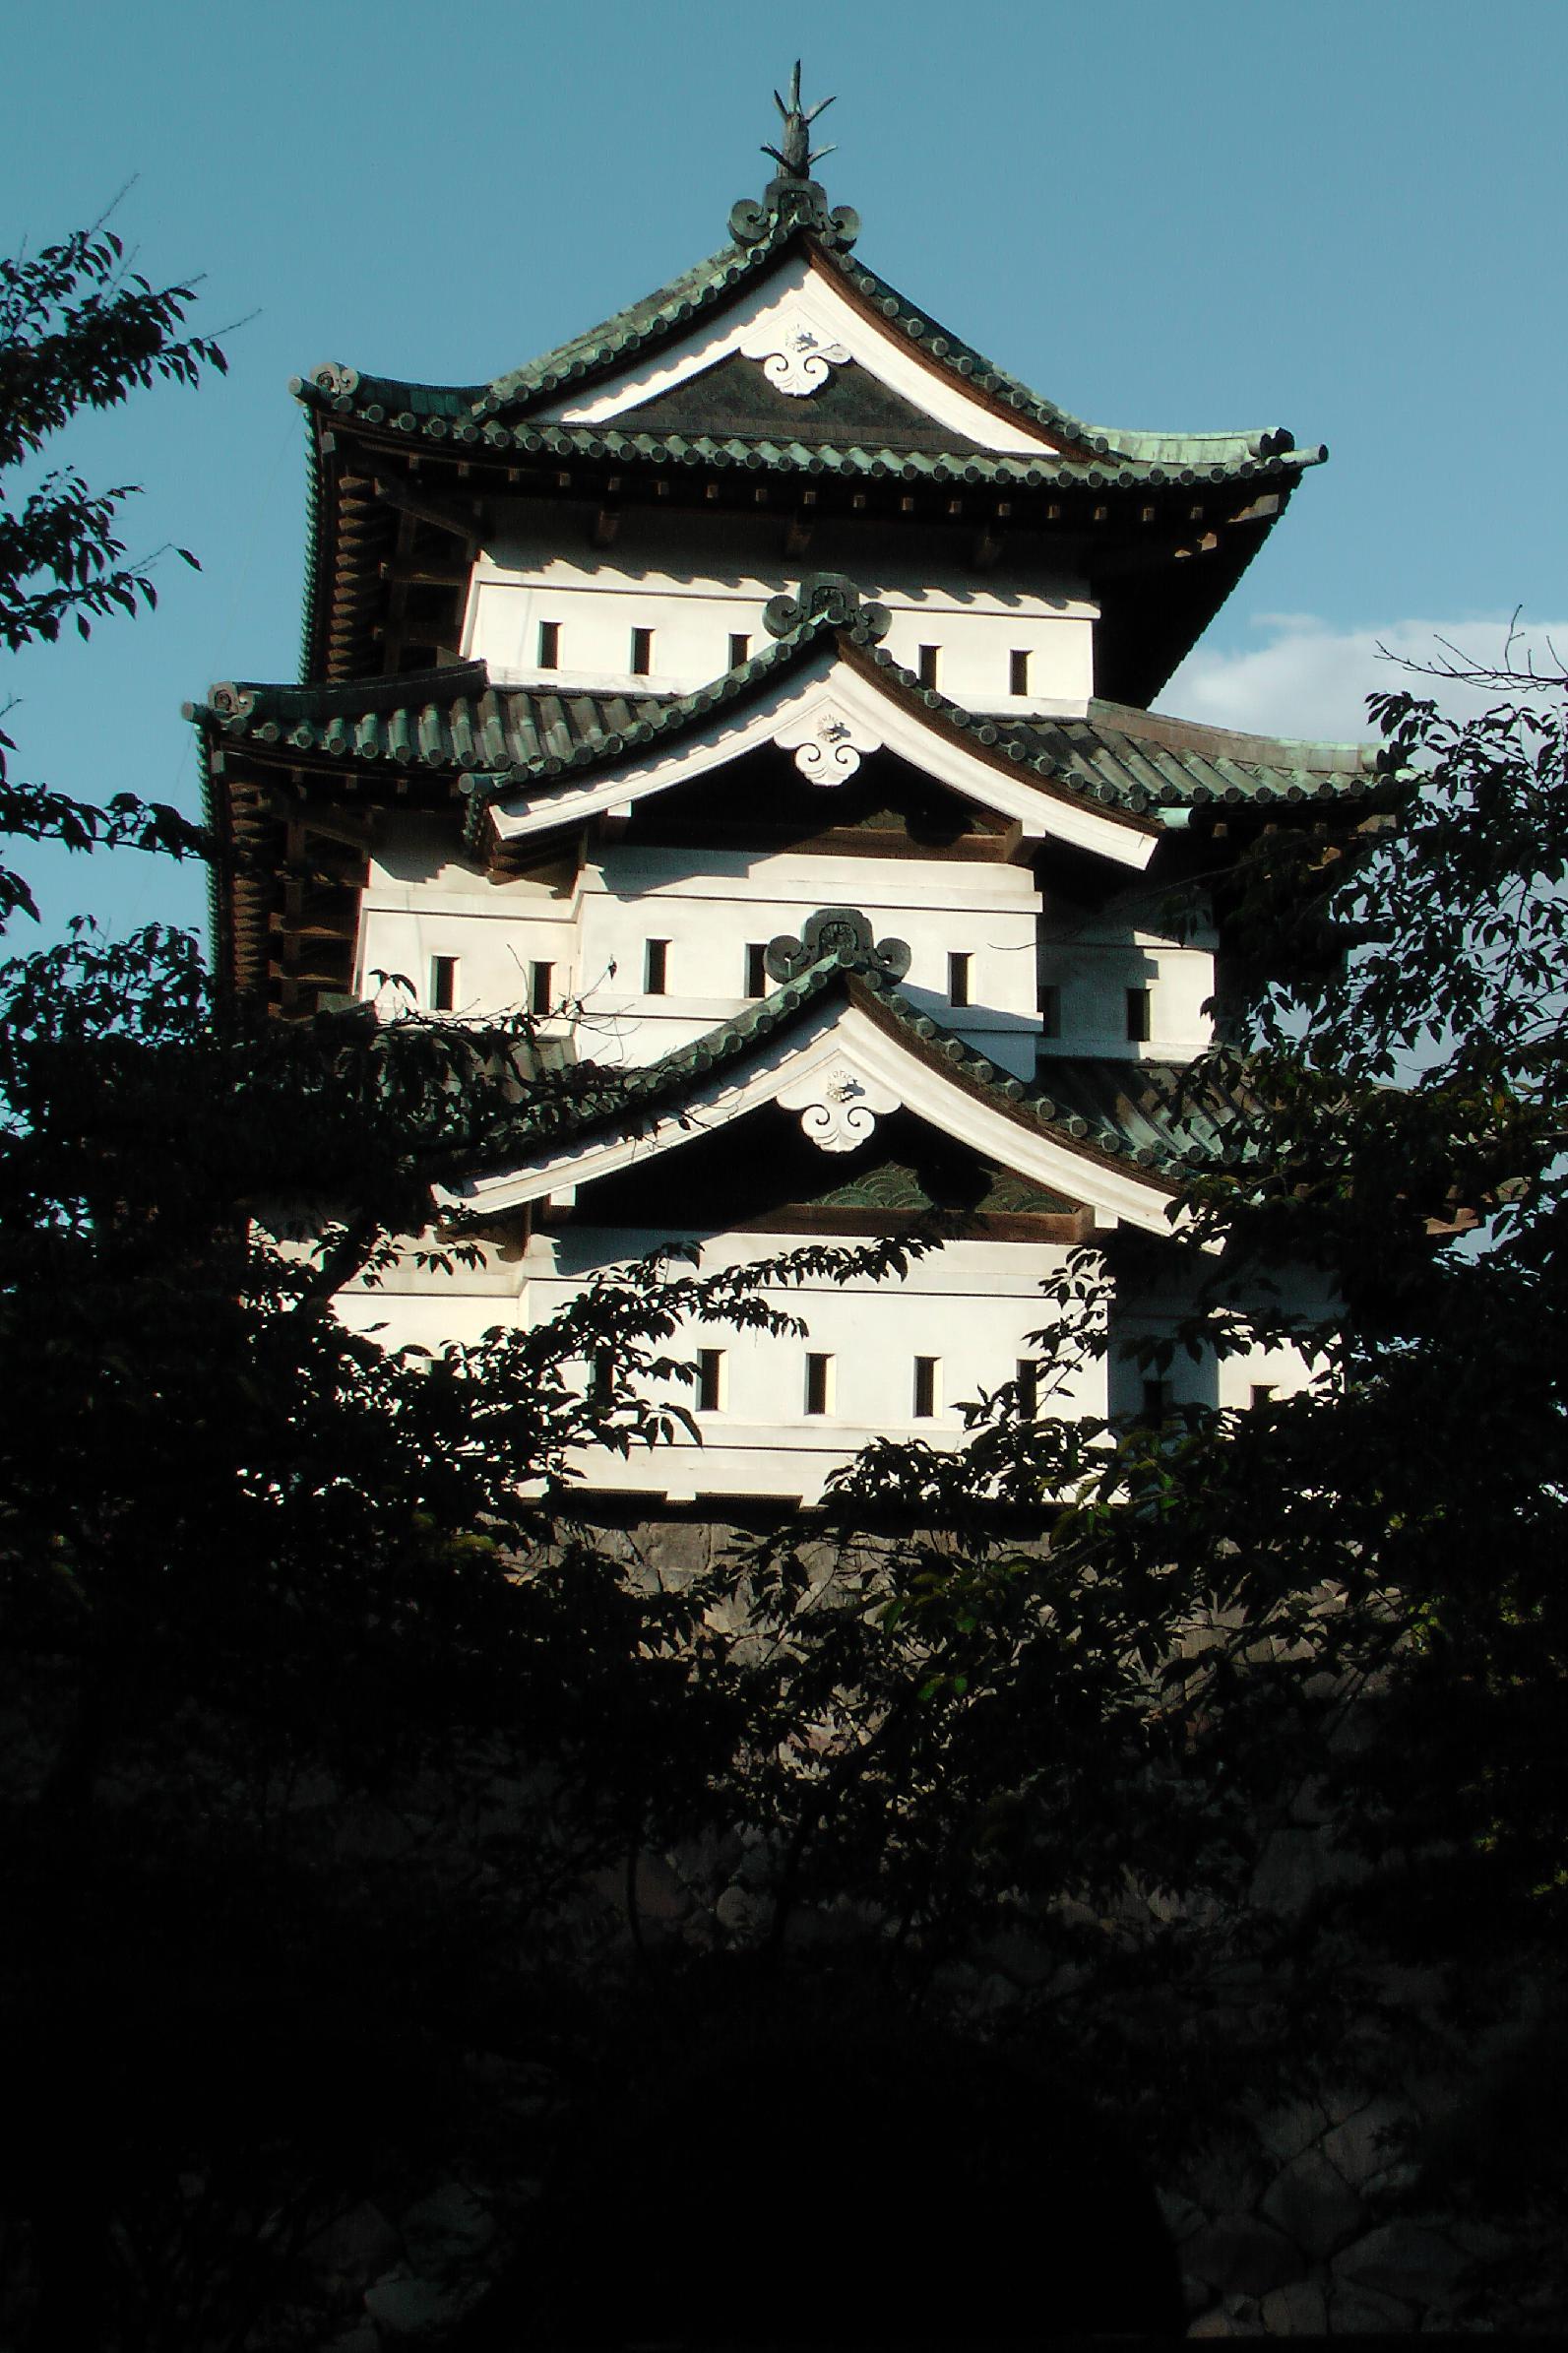 The castle of Hirosaki